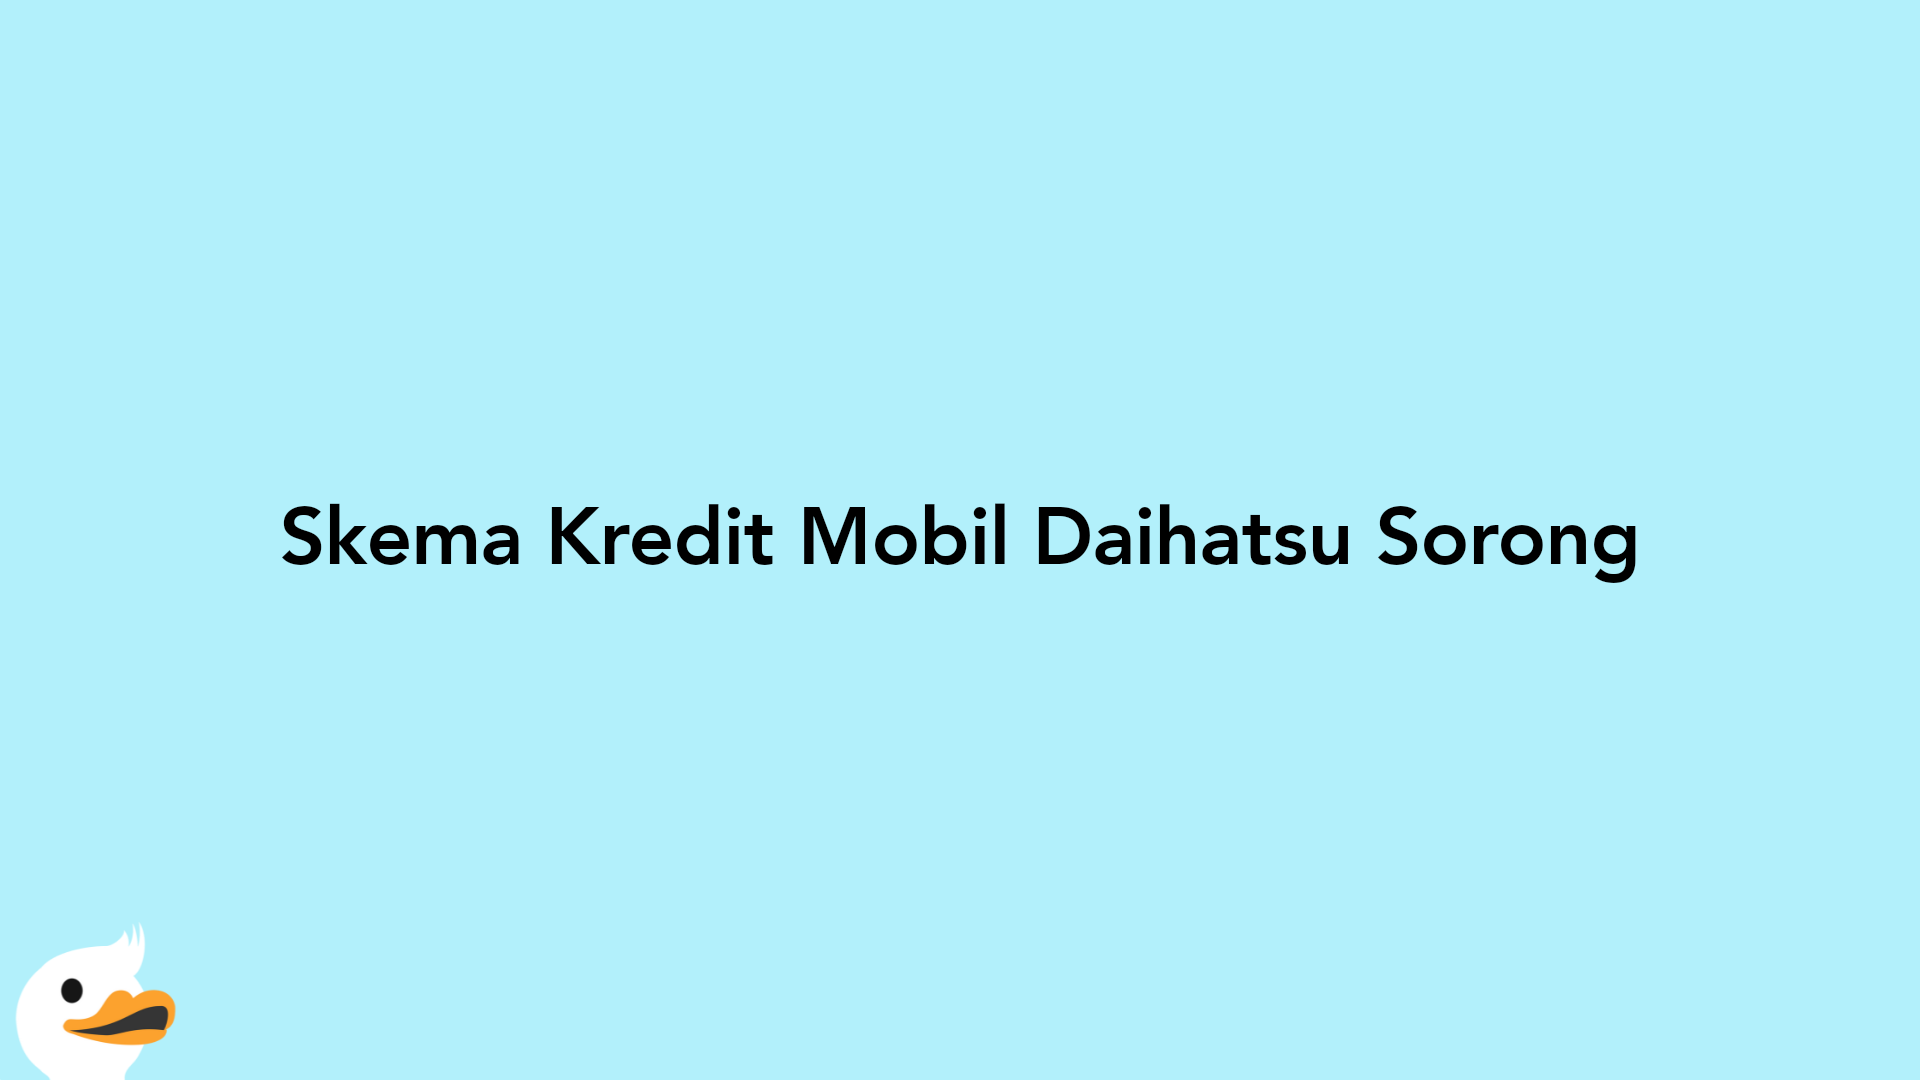 Skema Kredit Mobil Daihatsu Sorong